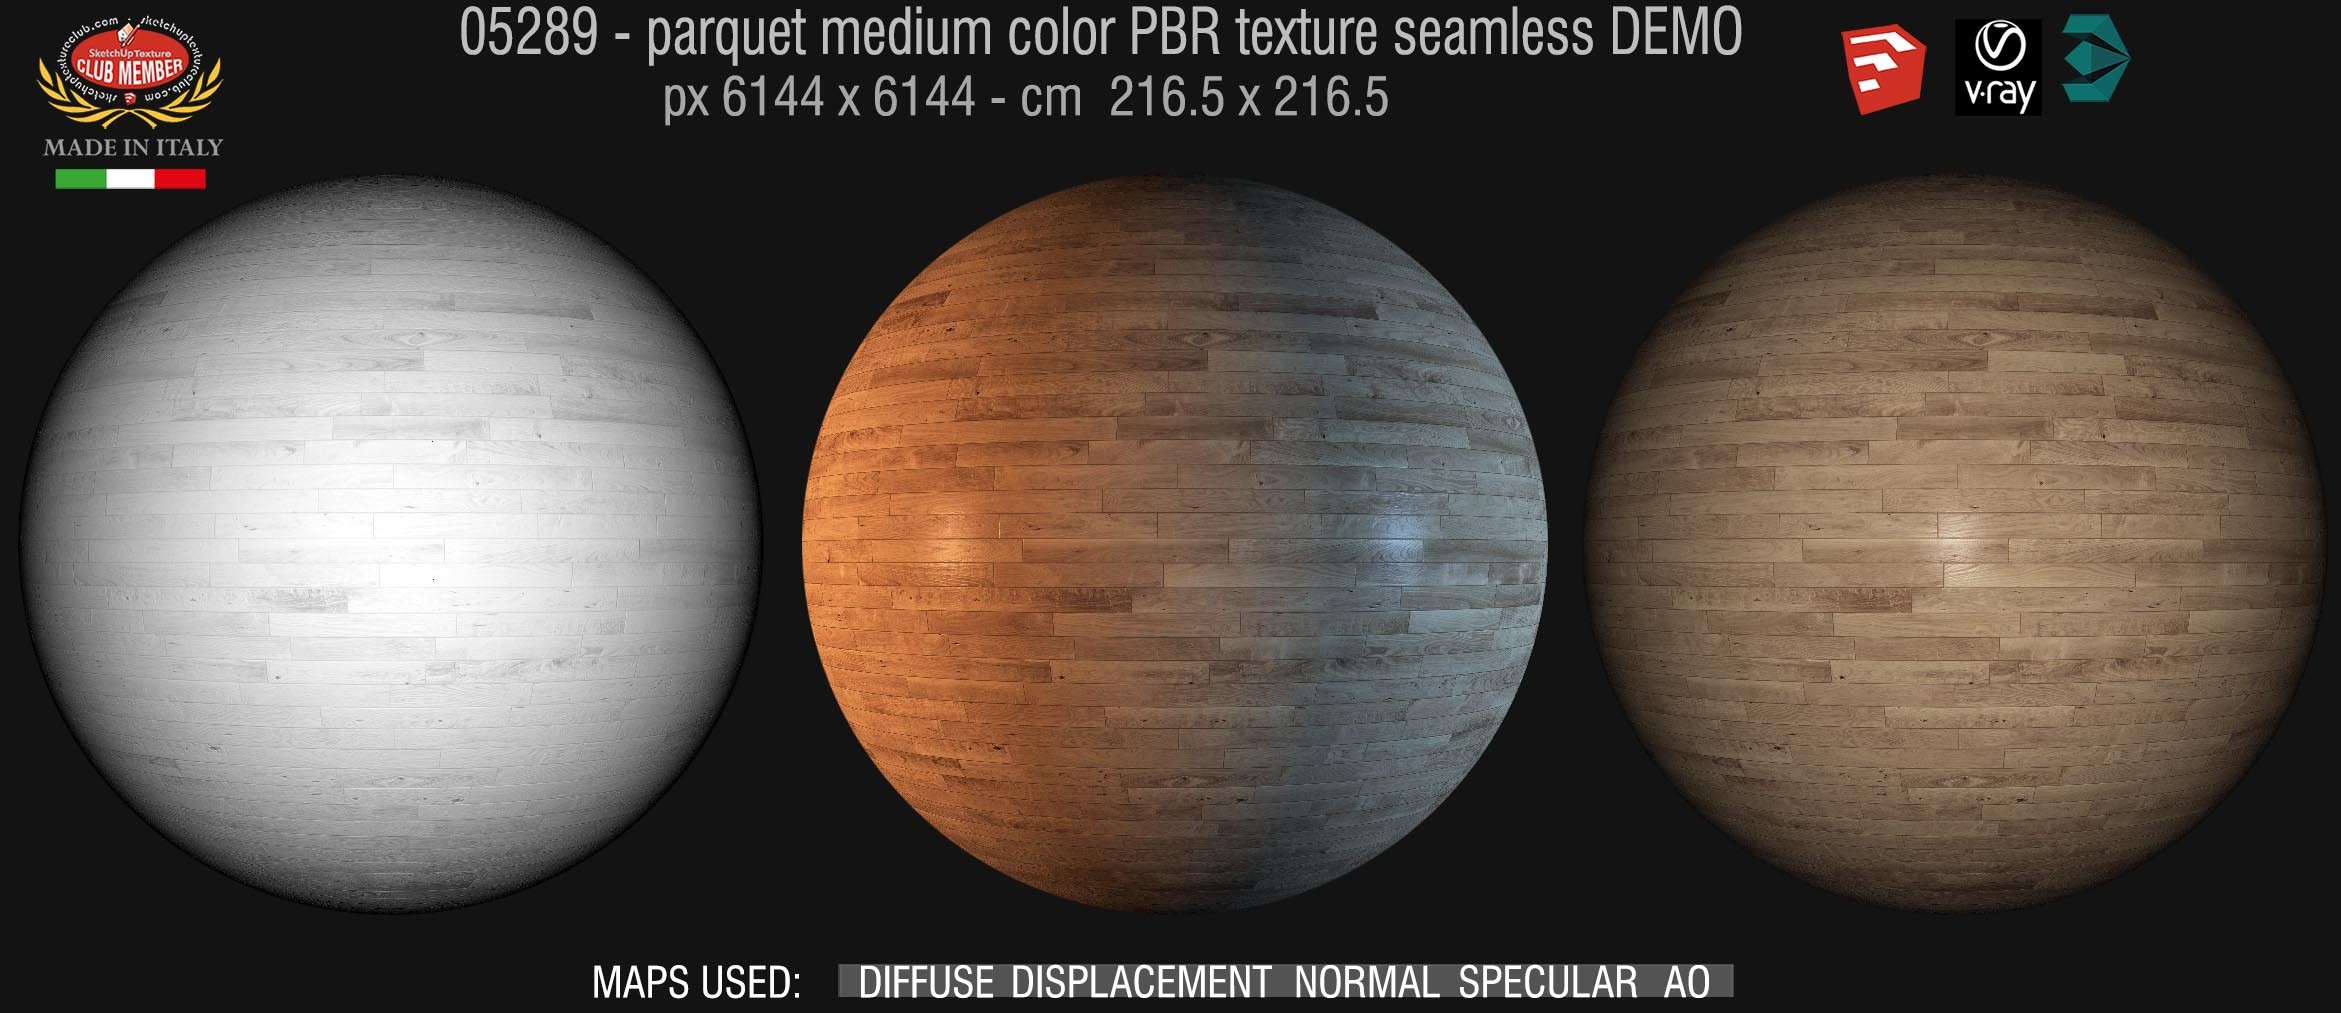 05289 parquet medium color PBR texture seamless DEMO